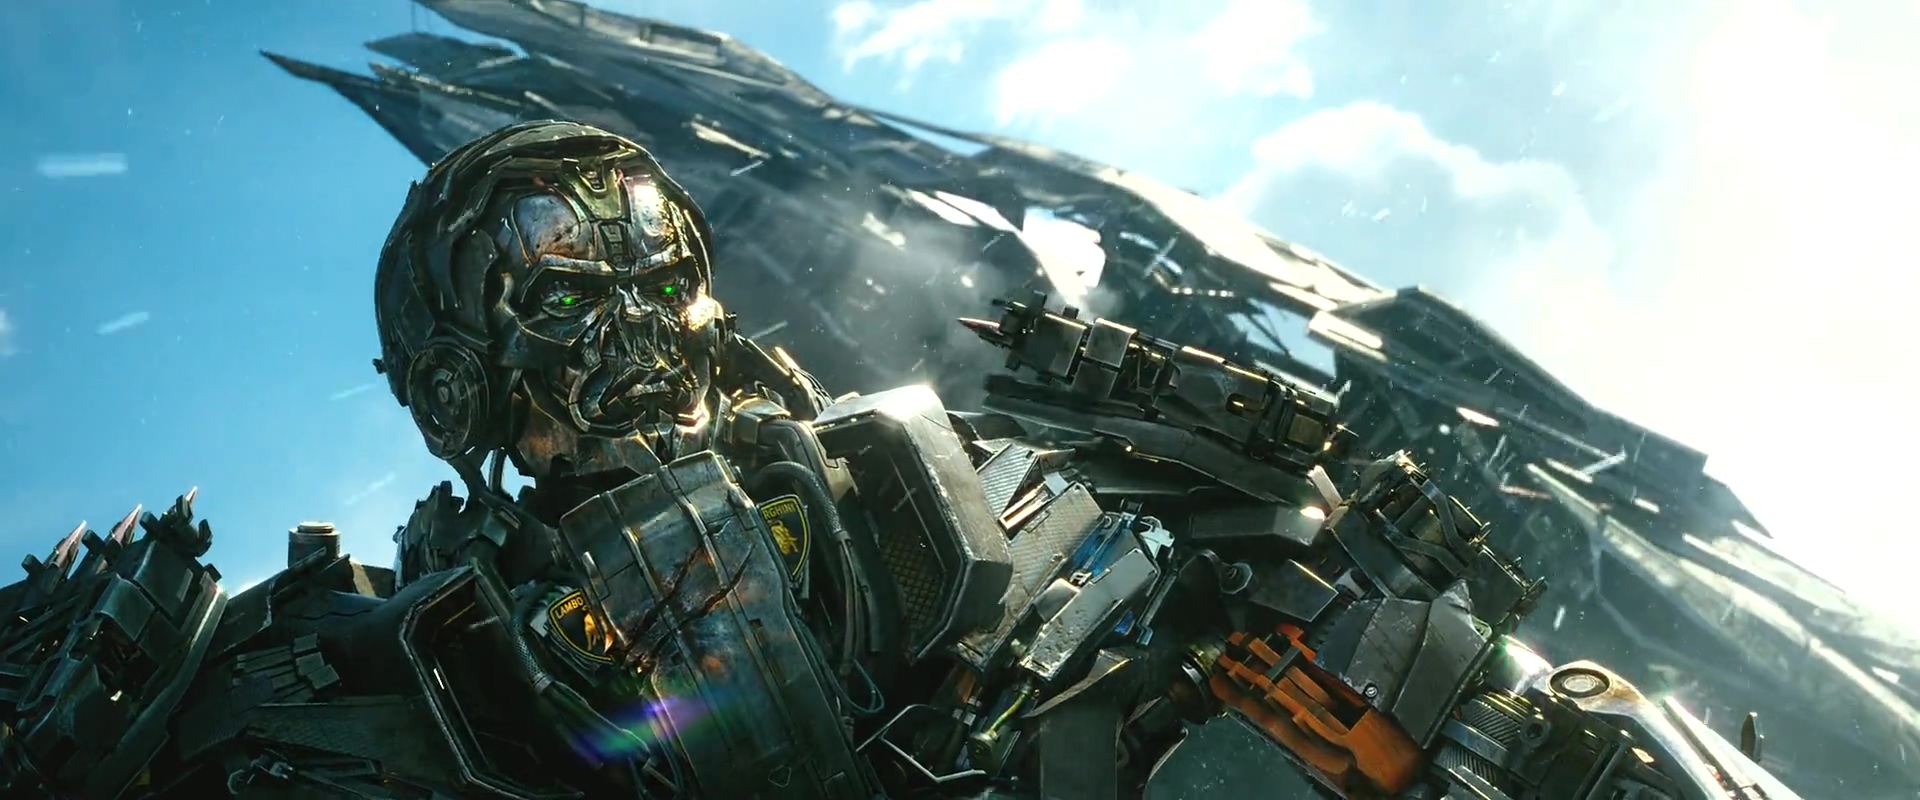 Transformers: Age of Extinction 2014 titlovi - skini